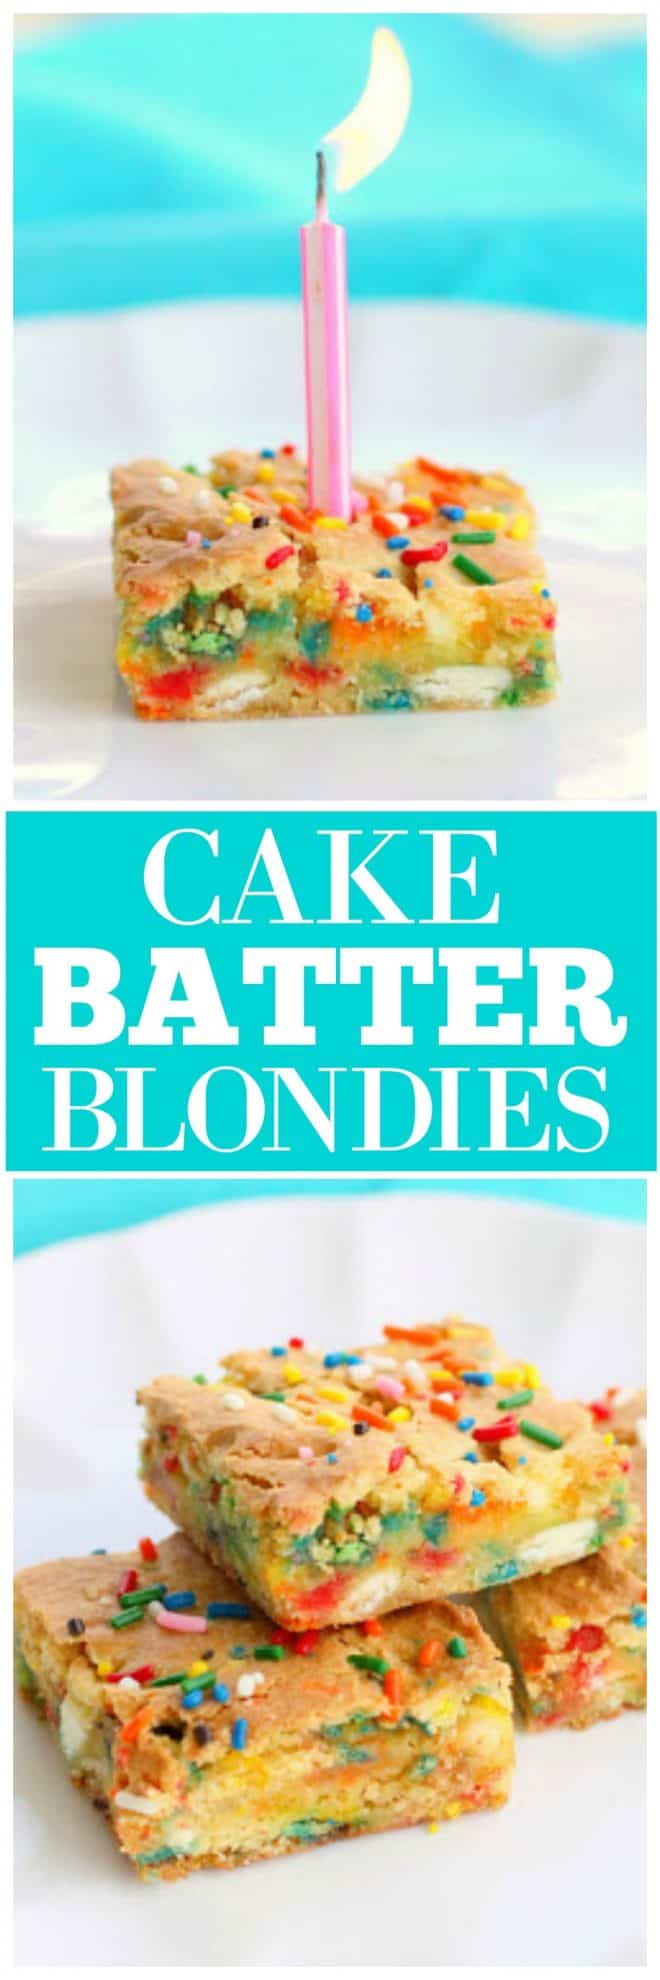 Cake Batter Blondies